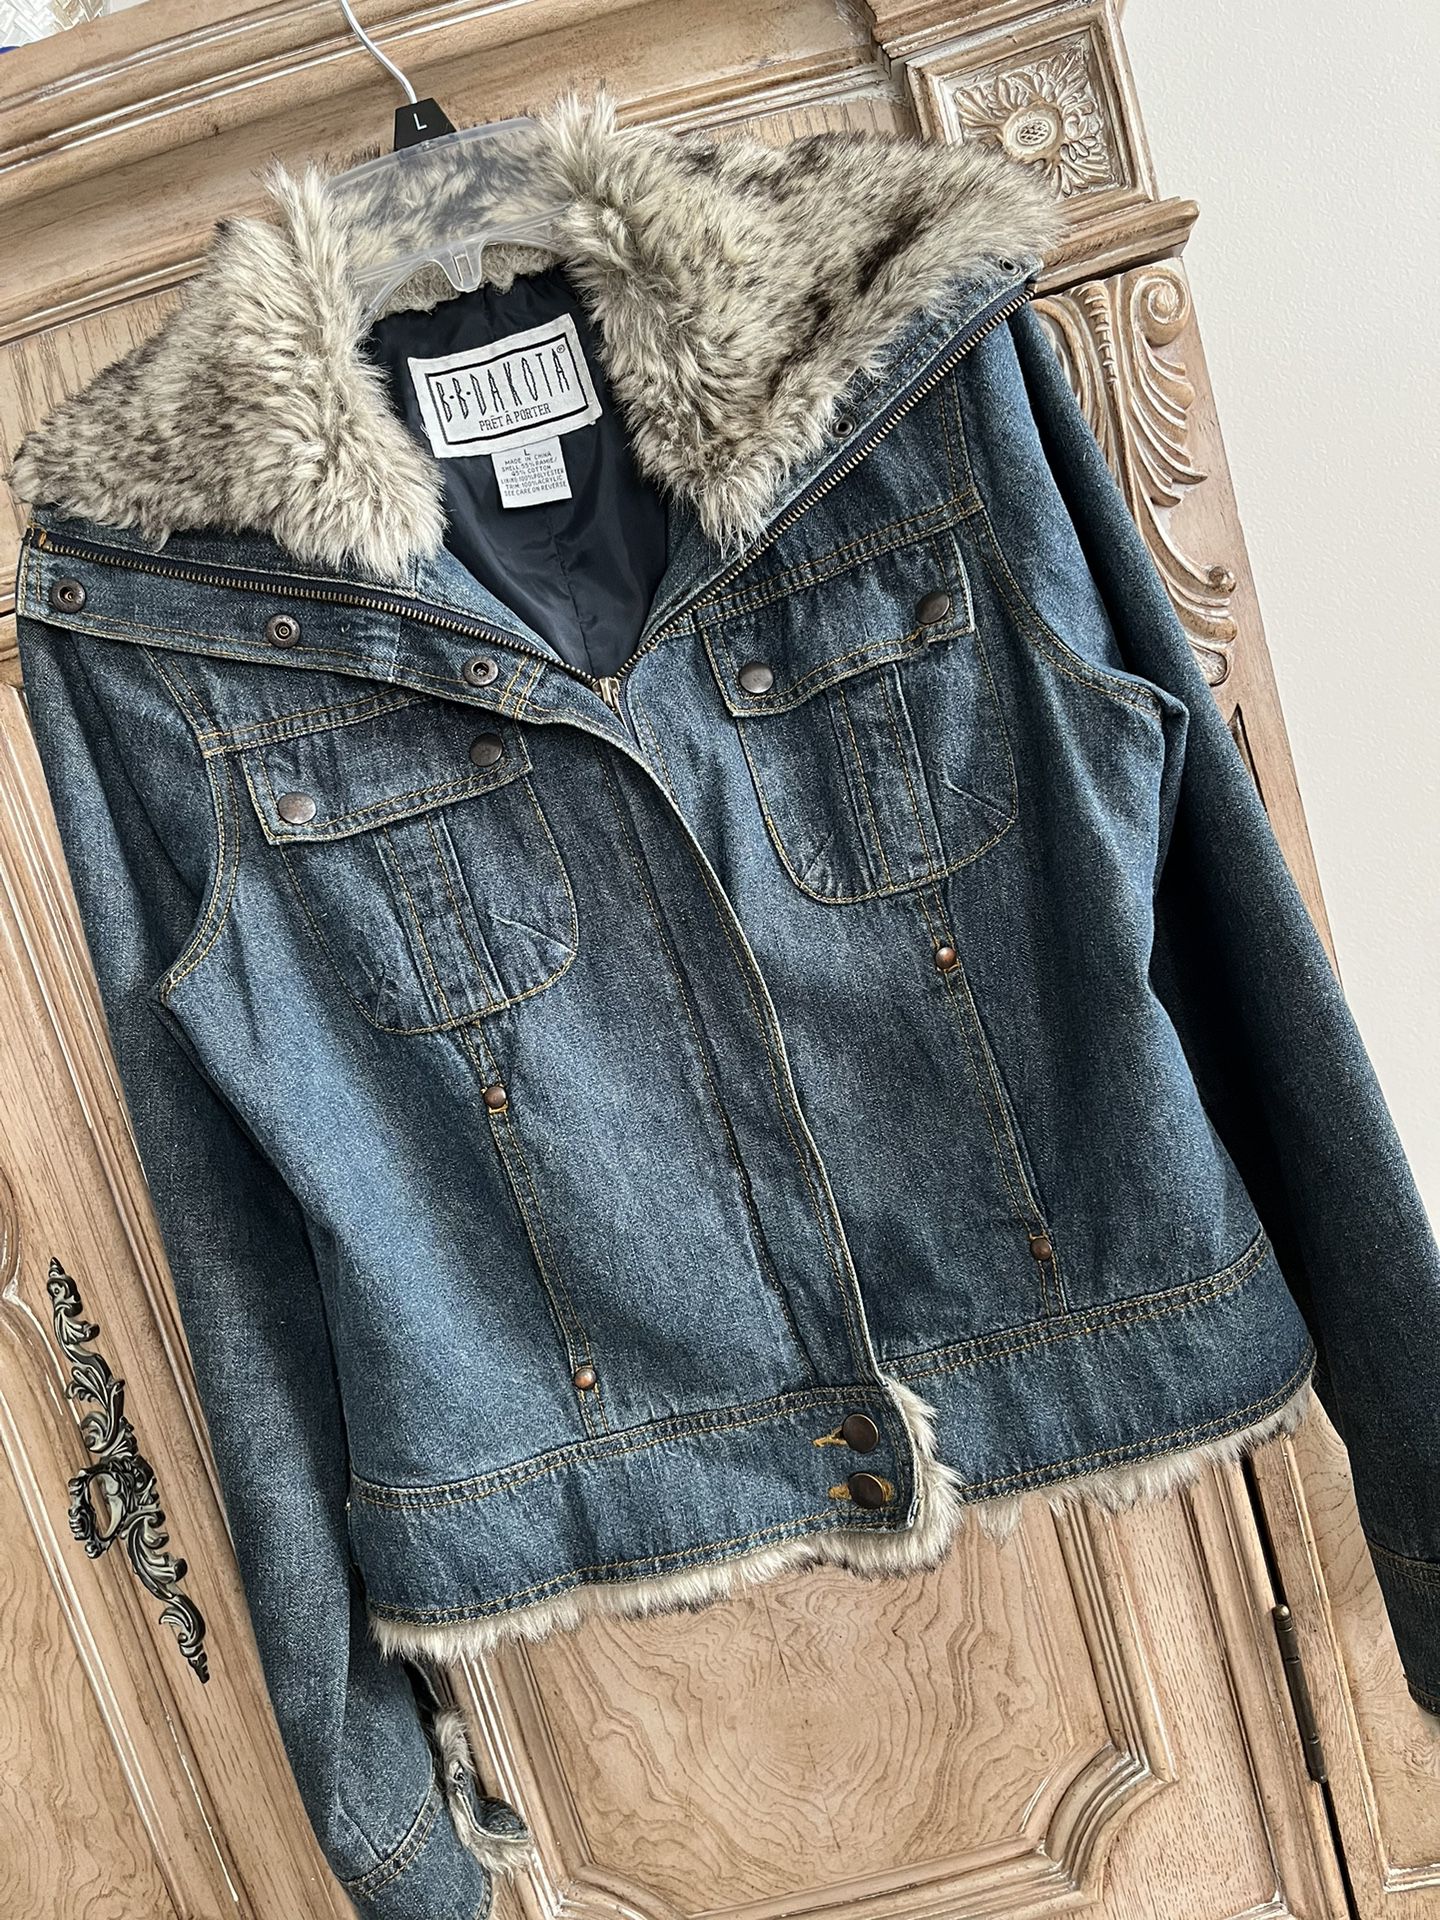 Women’s Jean Jacket w/Faux Fur - Size Junior’s Large from Macy’s - Pending Offer